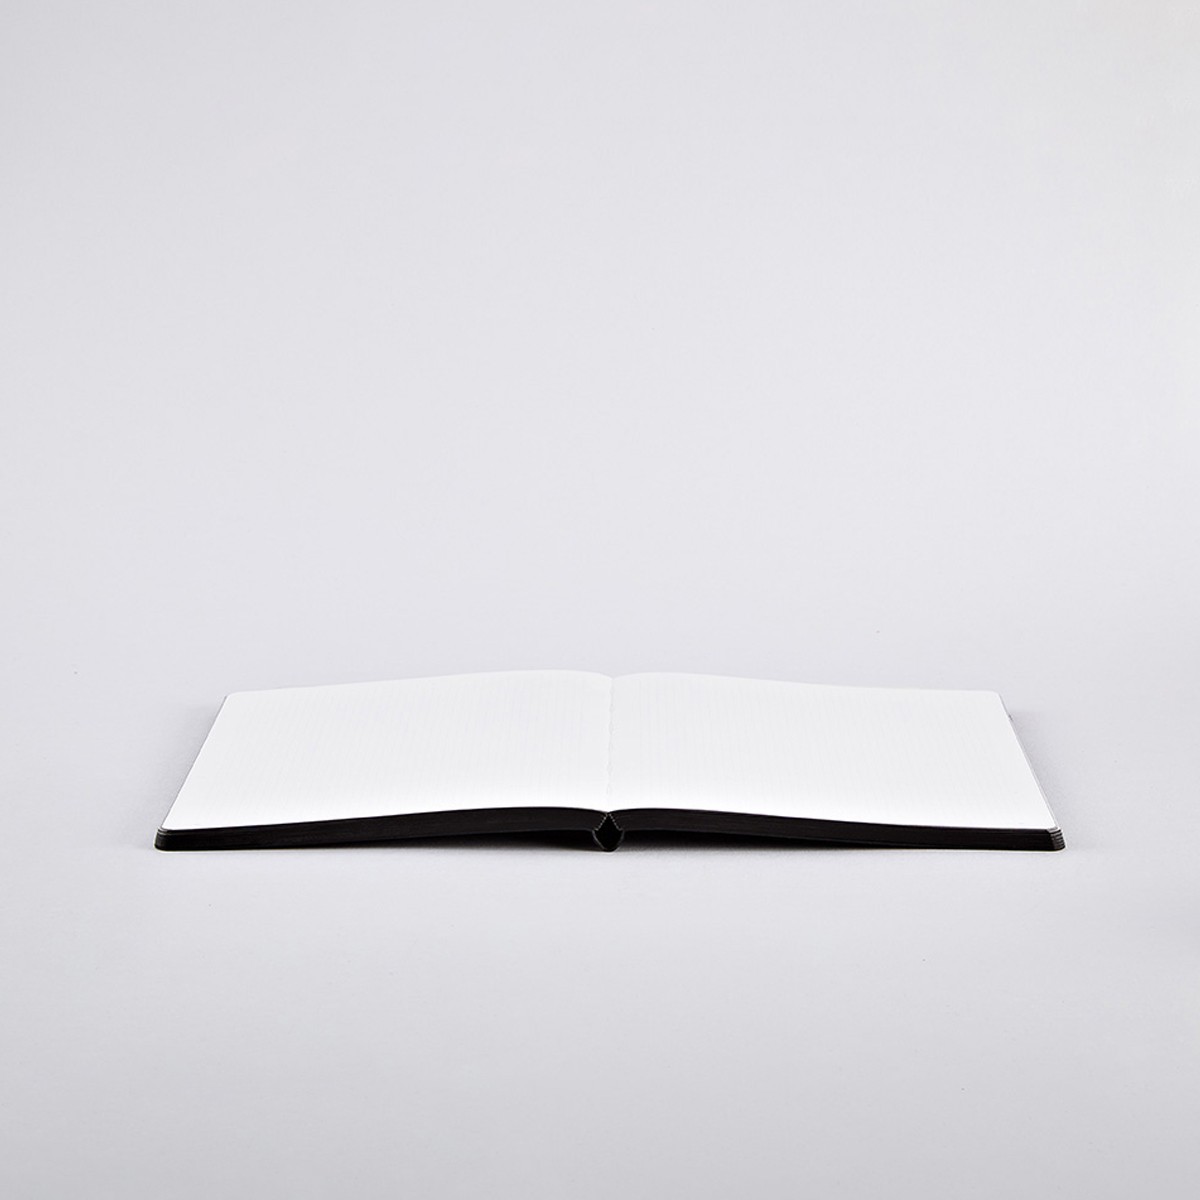 Nuuna Notebook Colour Clash L Light - INTERACTION